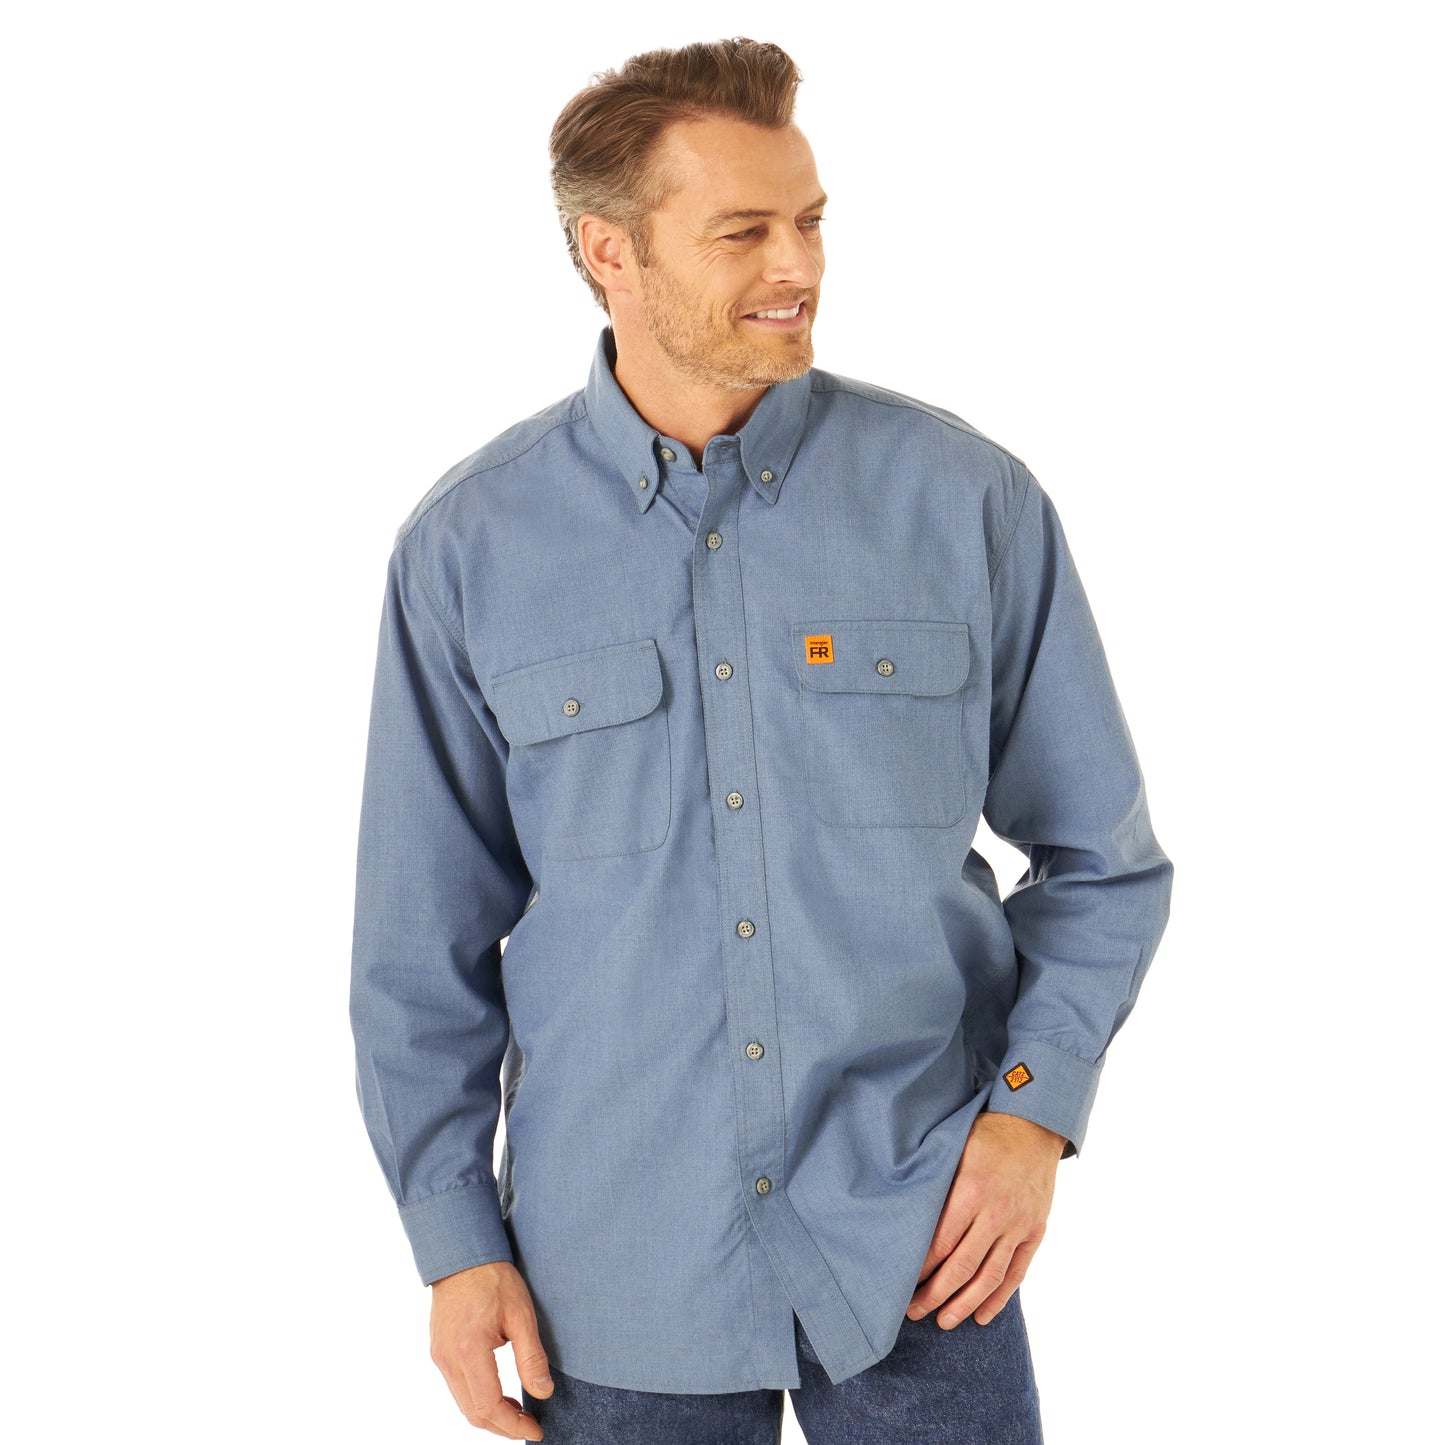 fr3w01l Men's FR Flame Resistant Long Sleeve Work Shirt by Wrangler